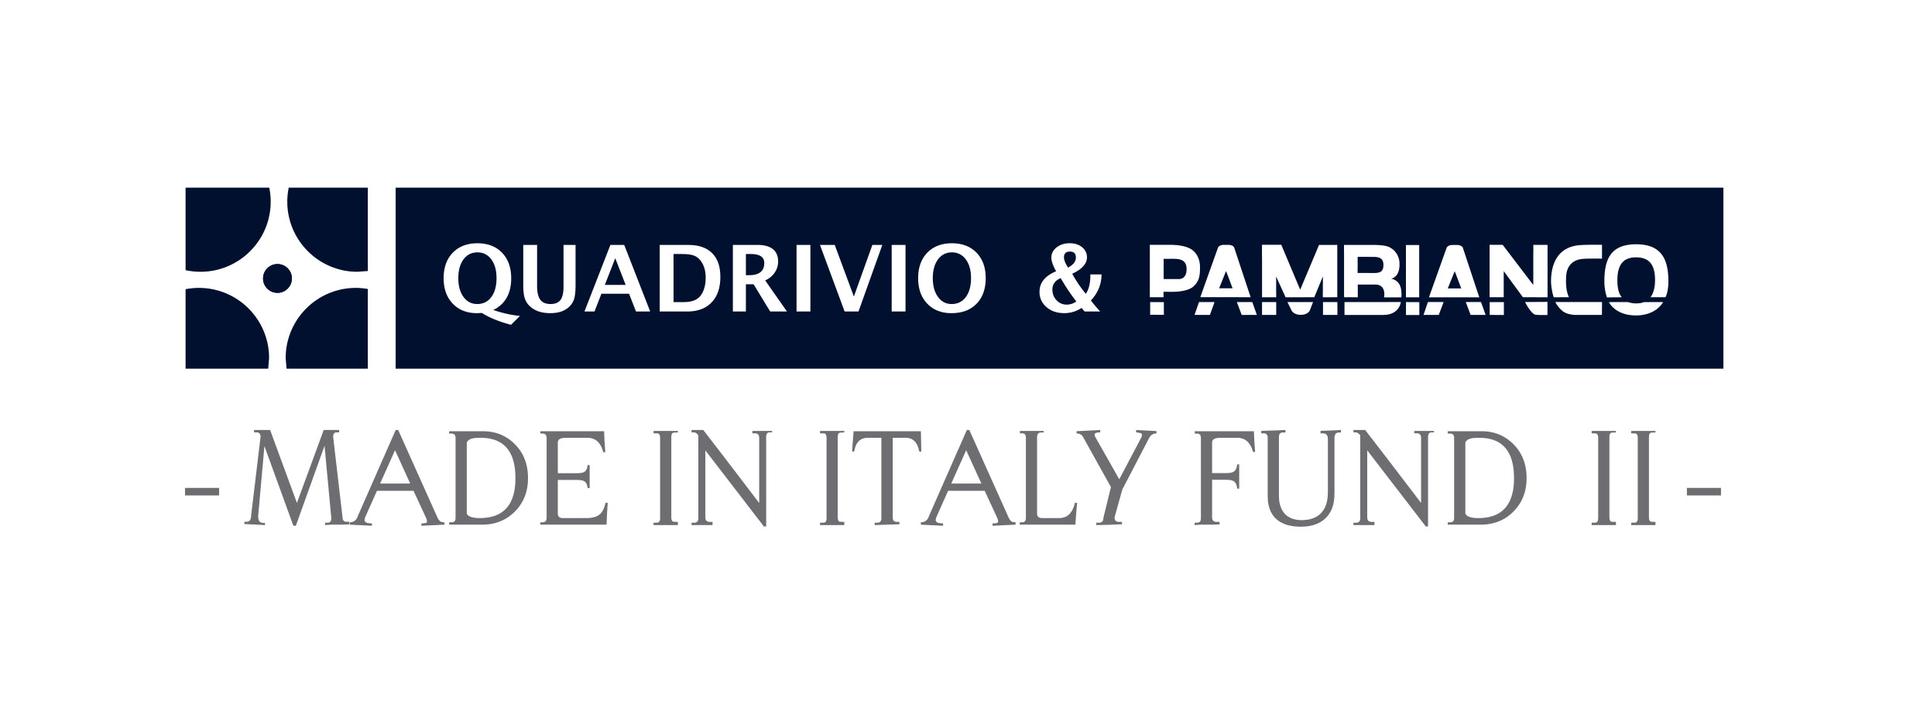 Quadrivio - Made in Italy Fund II